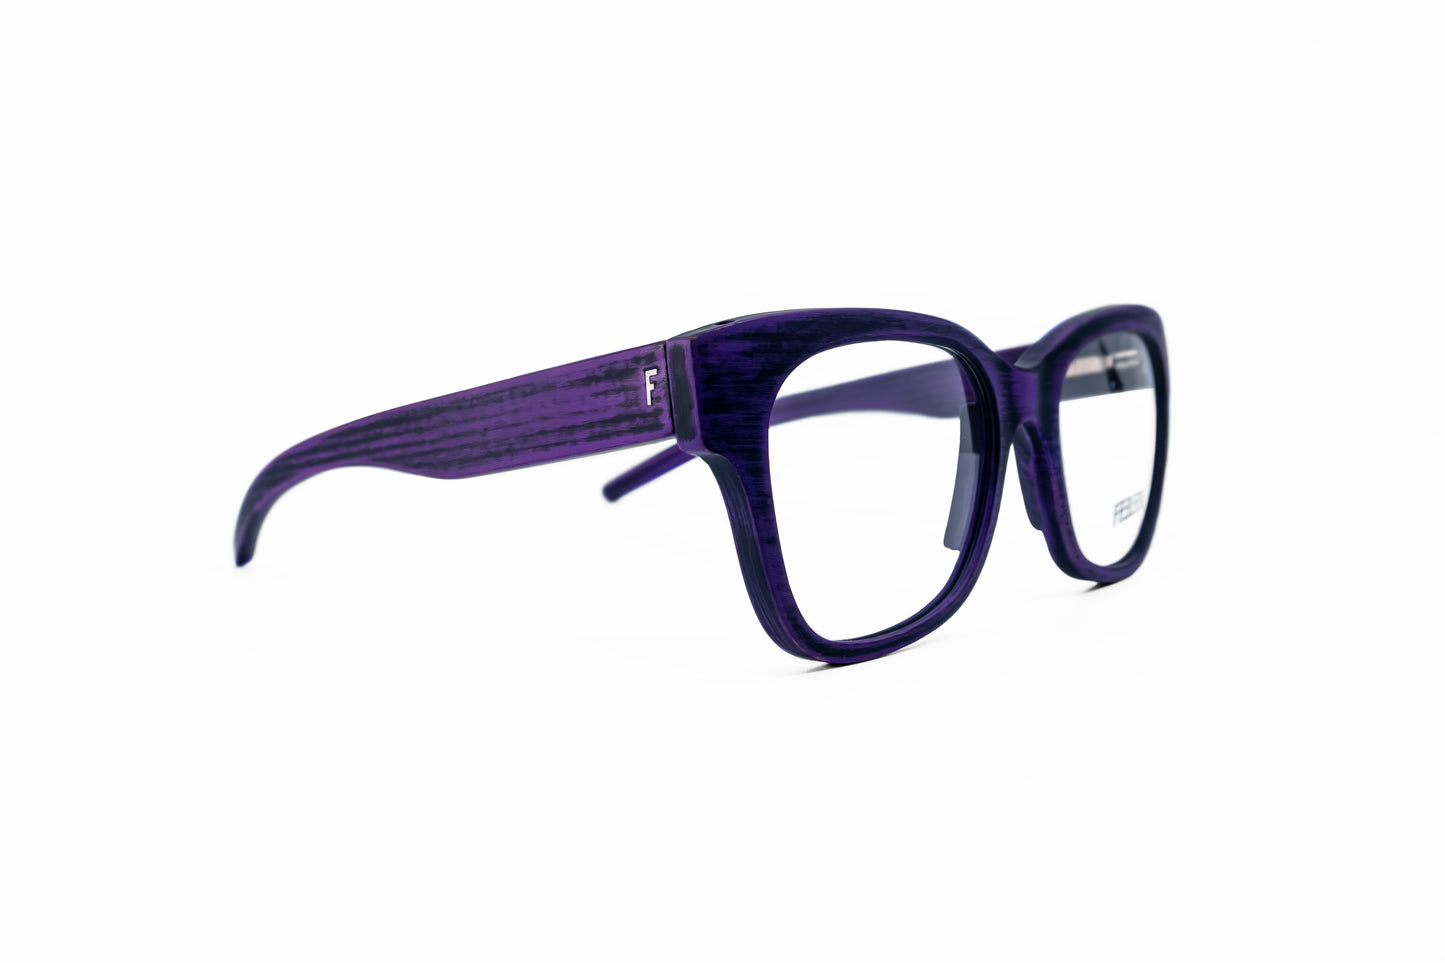 Parry by FEB31st wooden glasses purple